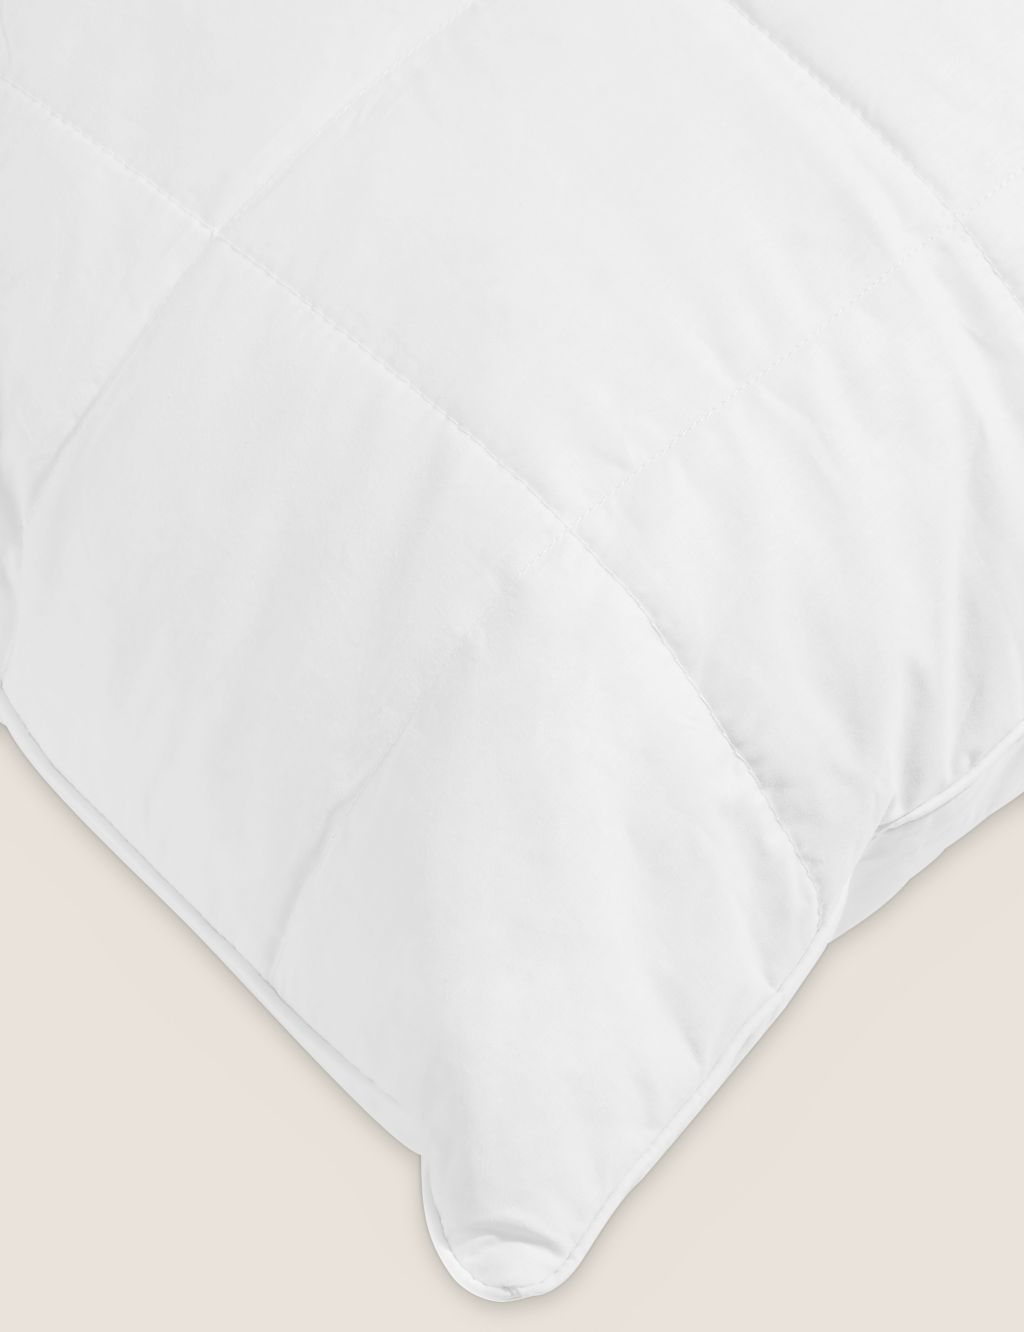 Sleep Solutions Goose Down Medium Surround Pillow image 6